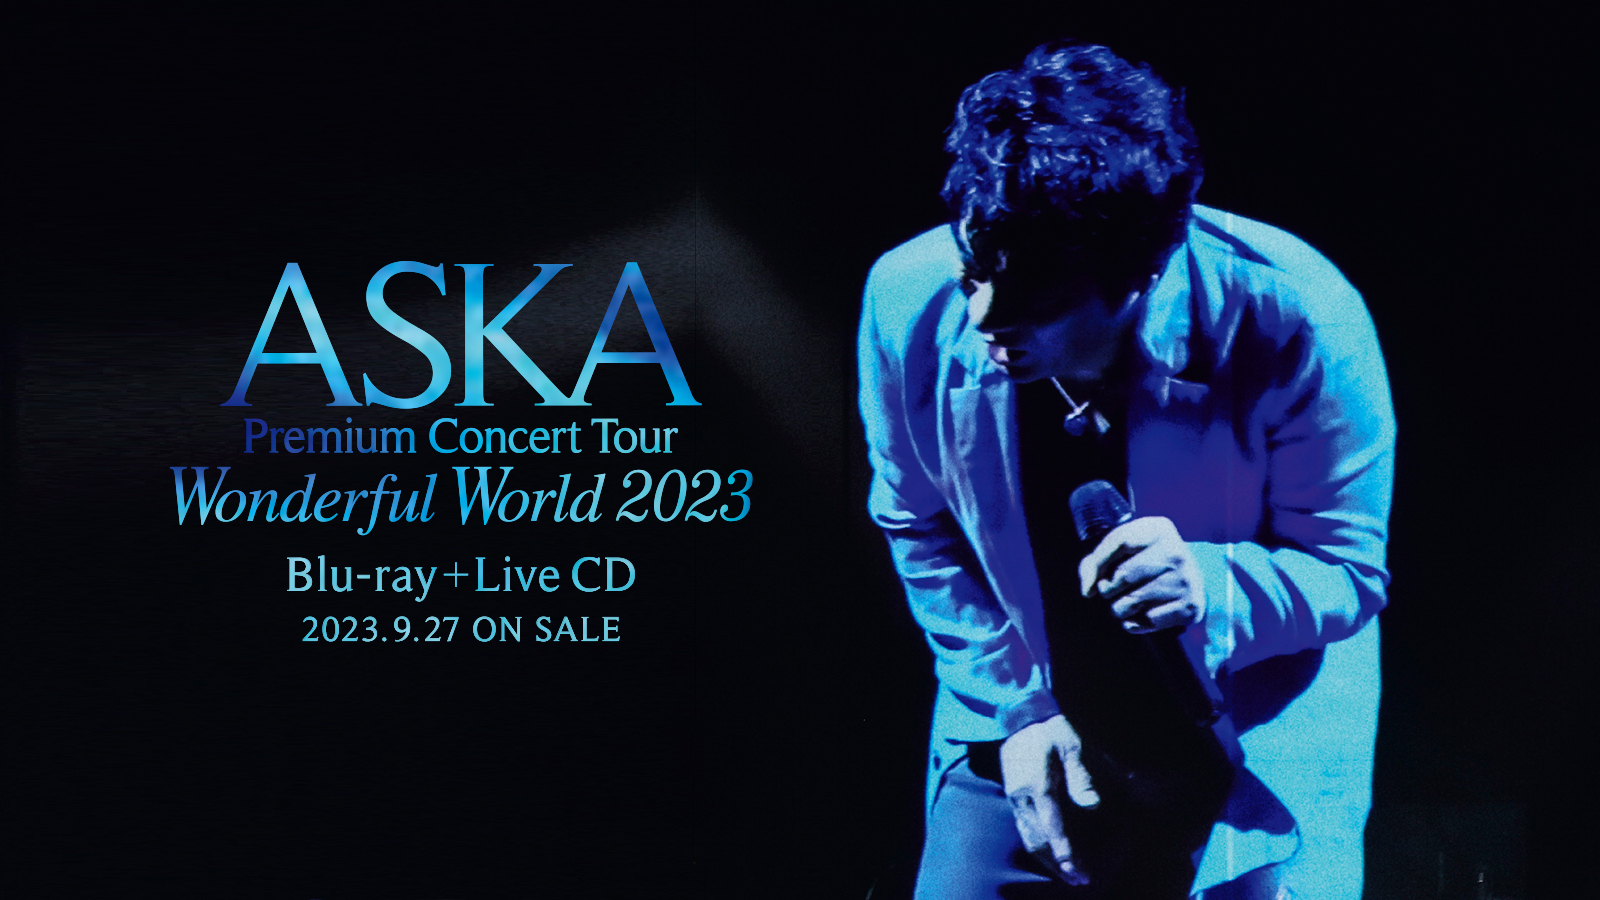 『ASKA Premium Concert Tour Wonderful World 2023』映像作品